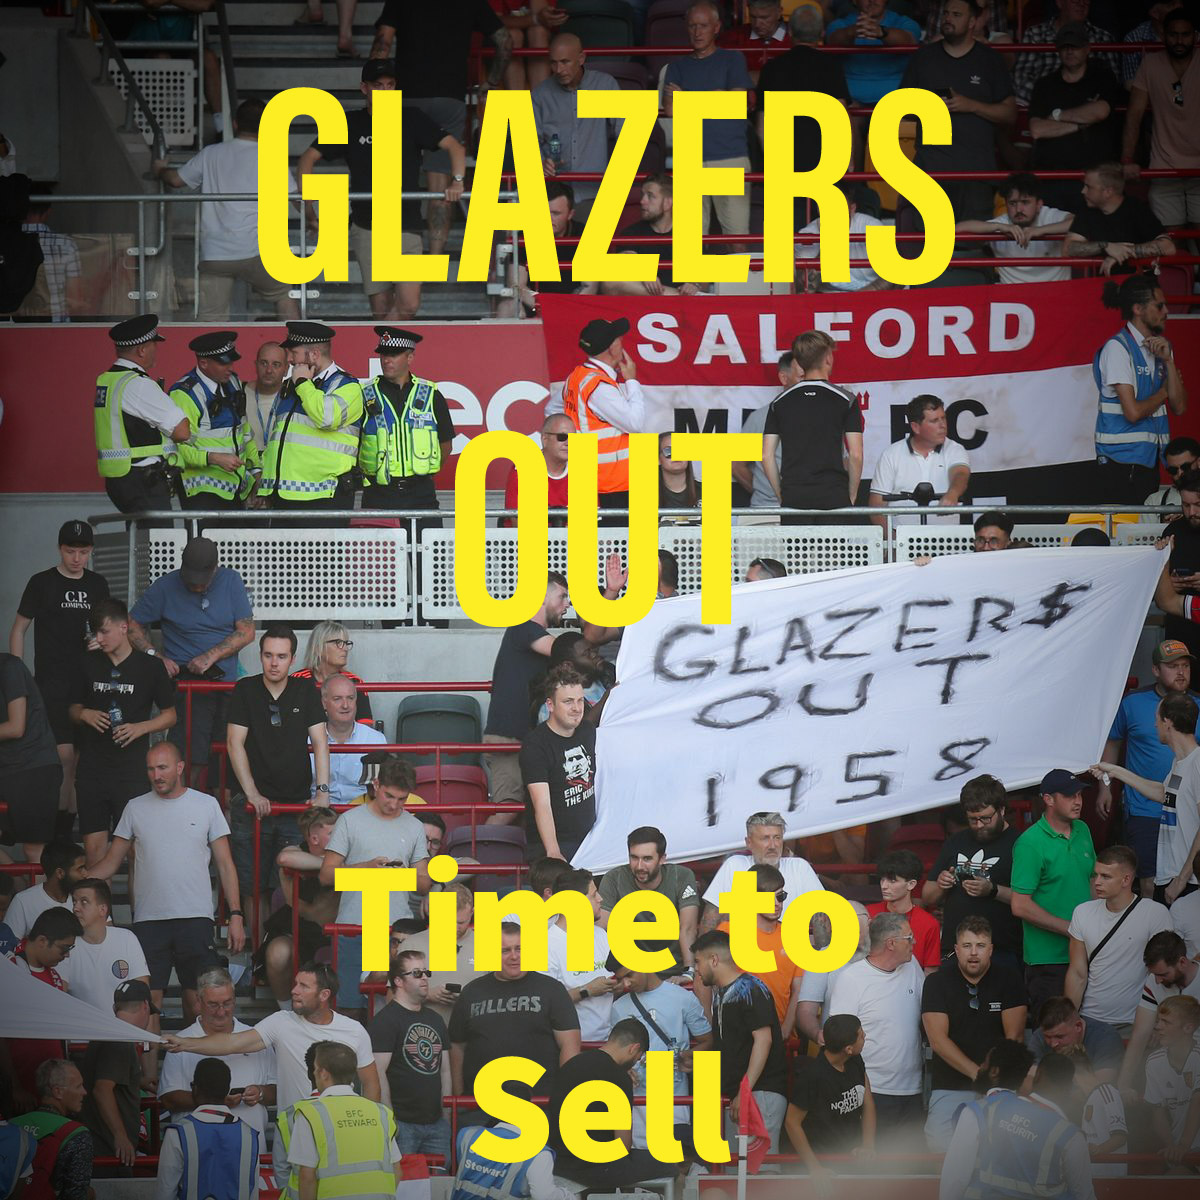 Sell up #GlazersOut #GlazersOutNOW #GlazersAreVermin #GlazersBurnInHell #GlazersSellManUtd #GlazersAreNonces